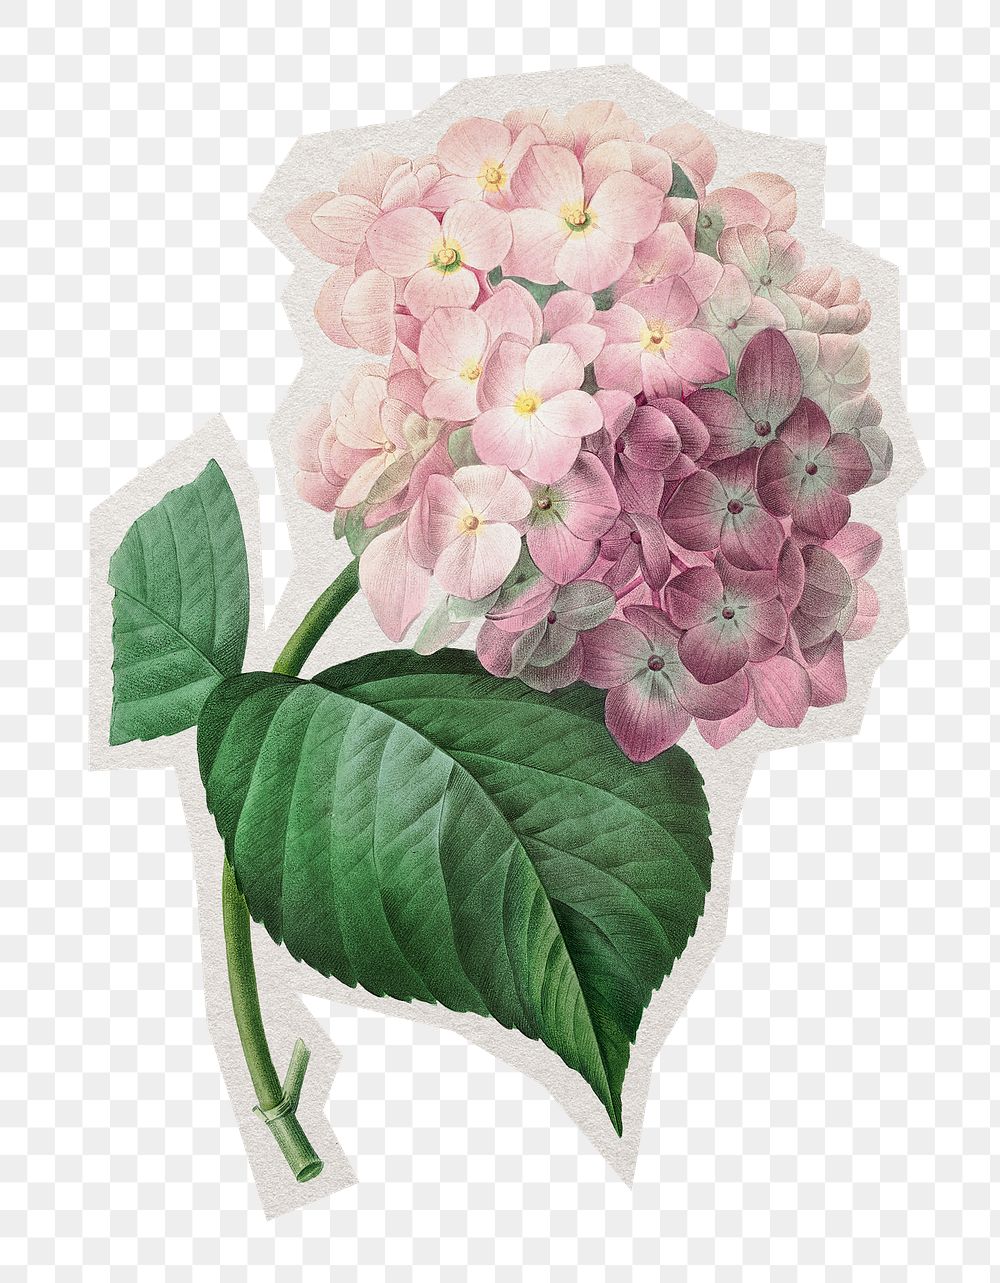 PNG Hydrangea flower sticker with white border, transparent background 